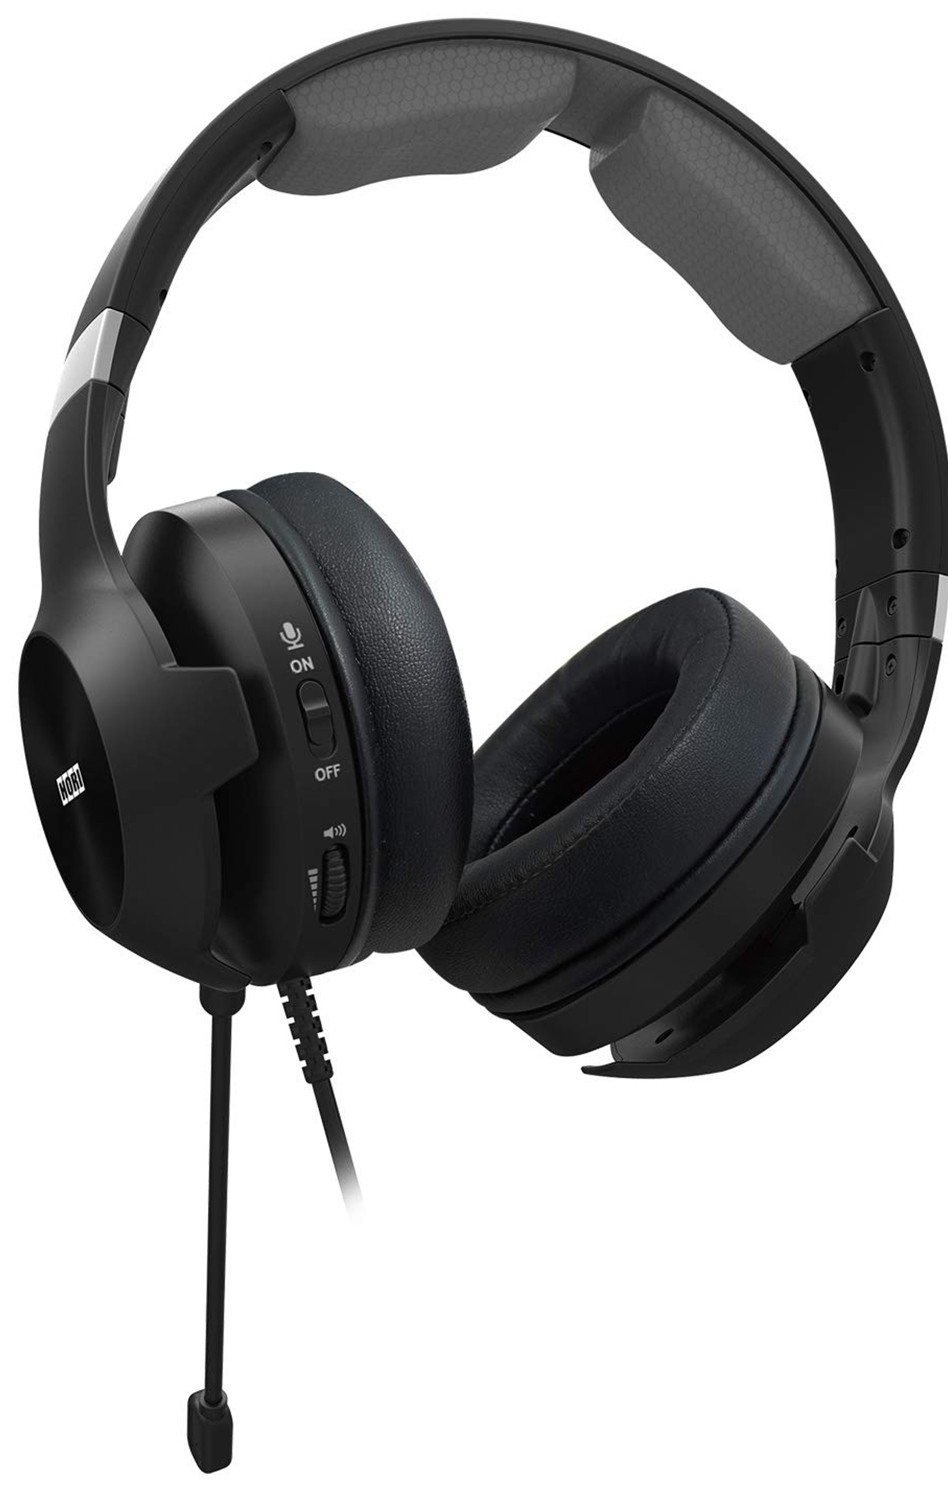   Hori gaming headset HG  Xbox One / Xbox Series X/S / PC (AB06-001U)